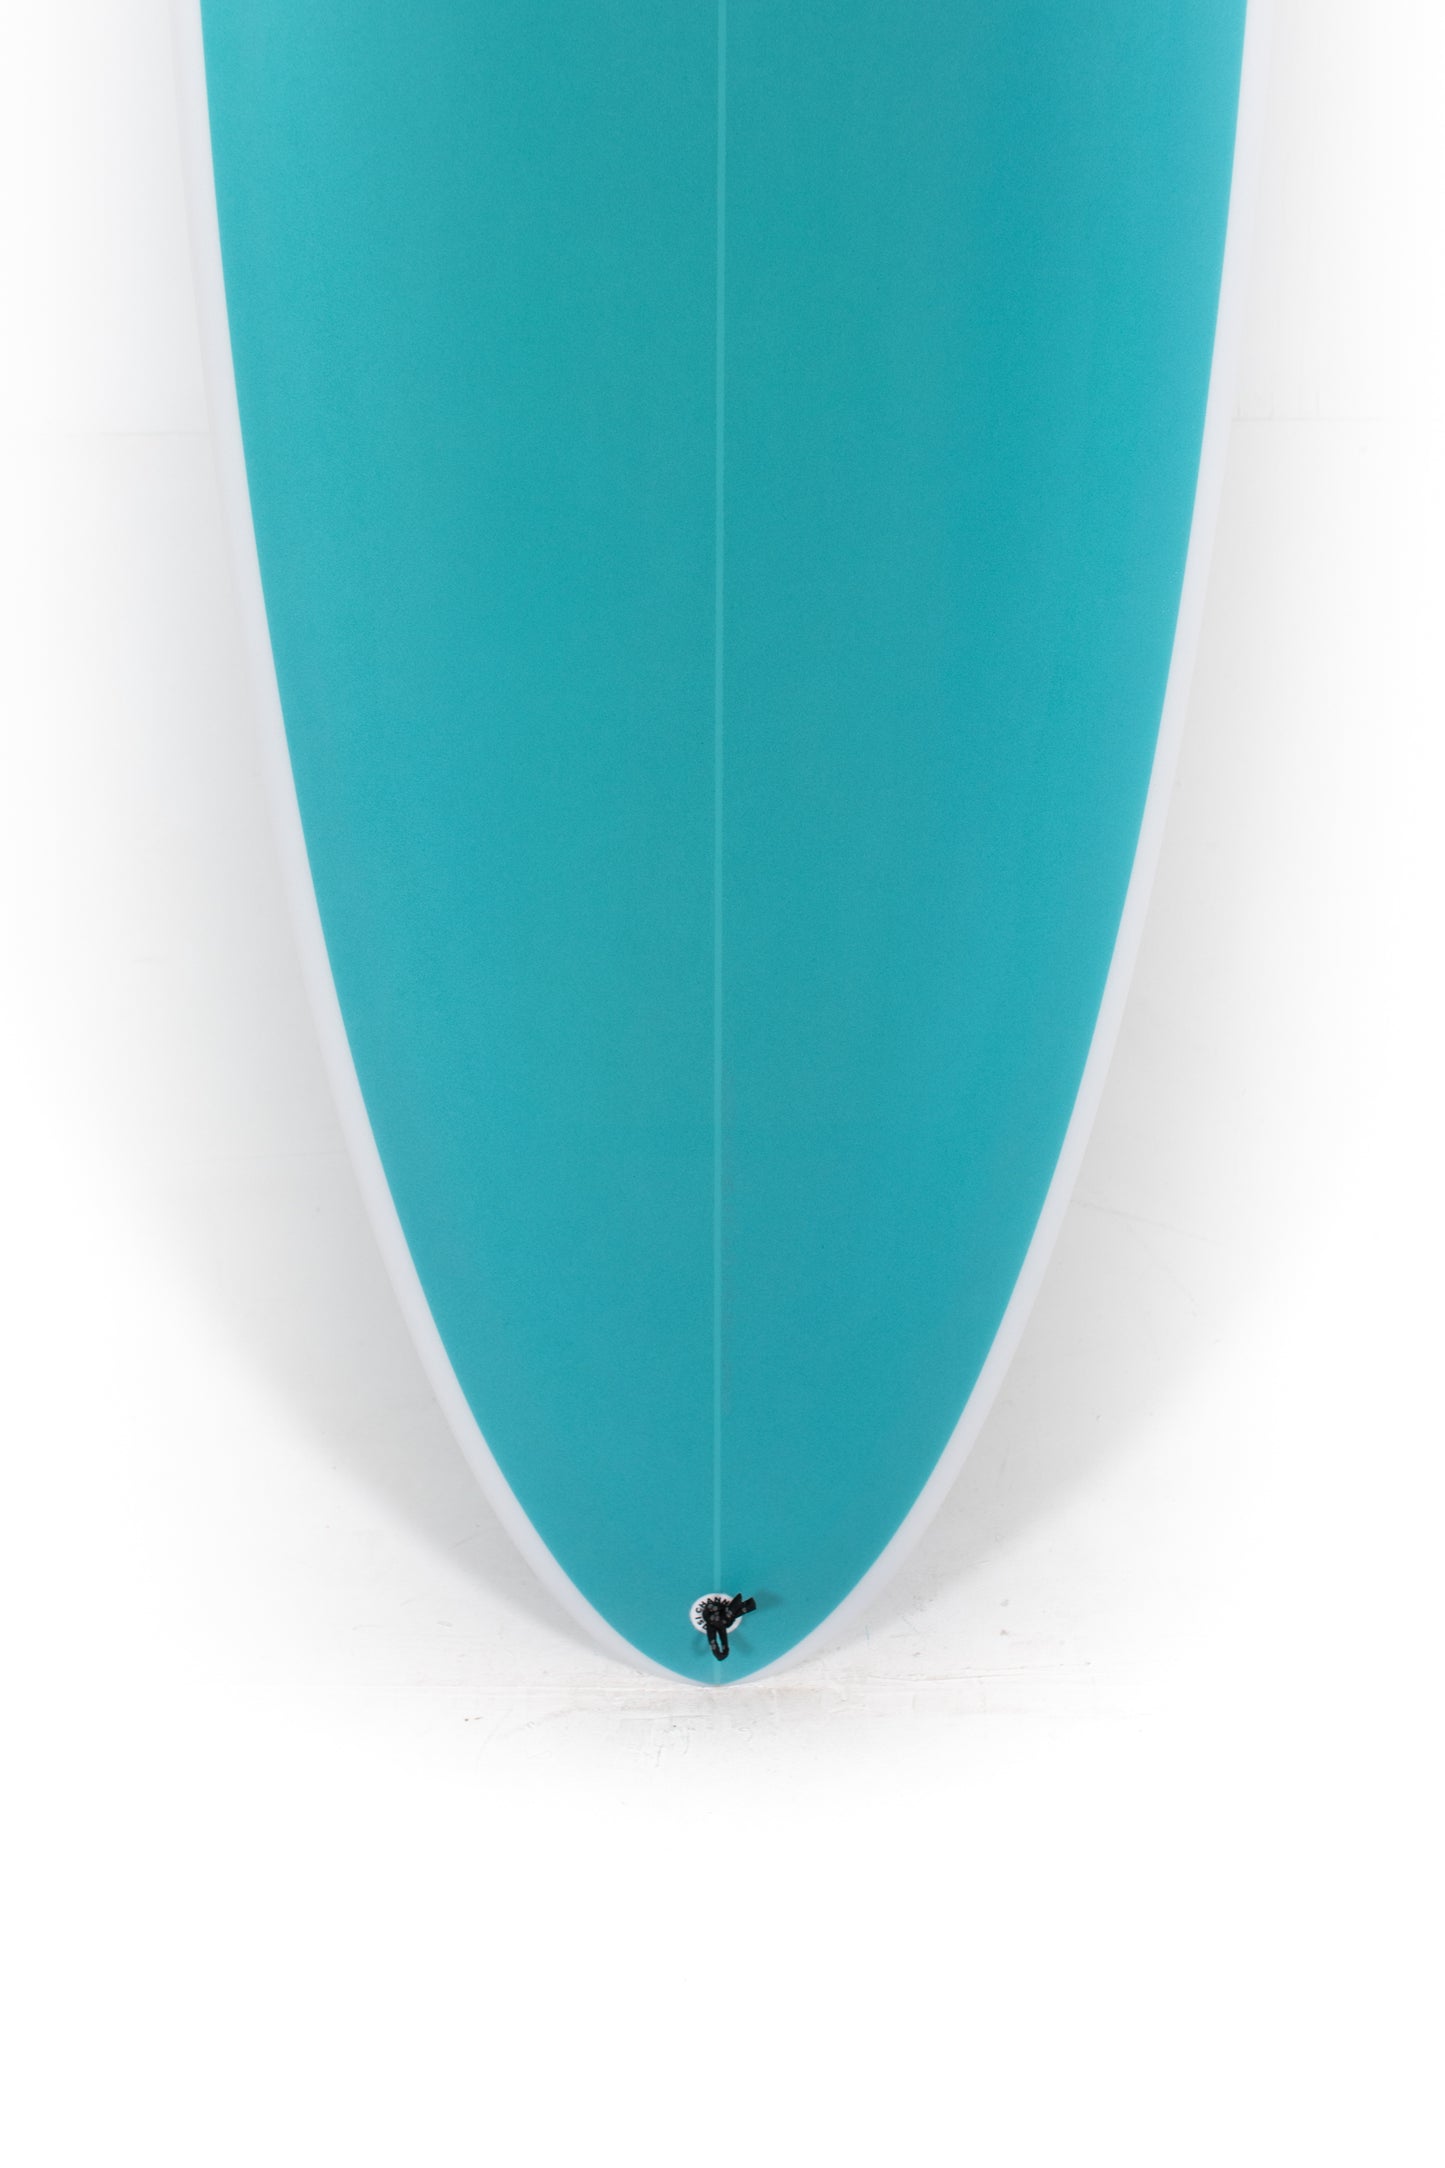 
                  
                    Pukas-Surf-Shop-Channel-Island-Surfboards-CI-Mid-Twin-Al-Merrick-6_5_-CI32527
                  
                